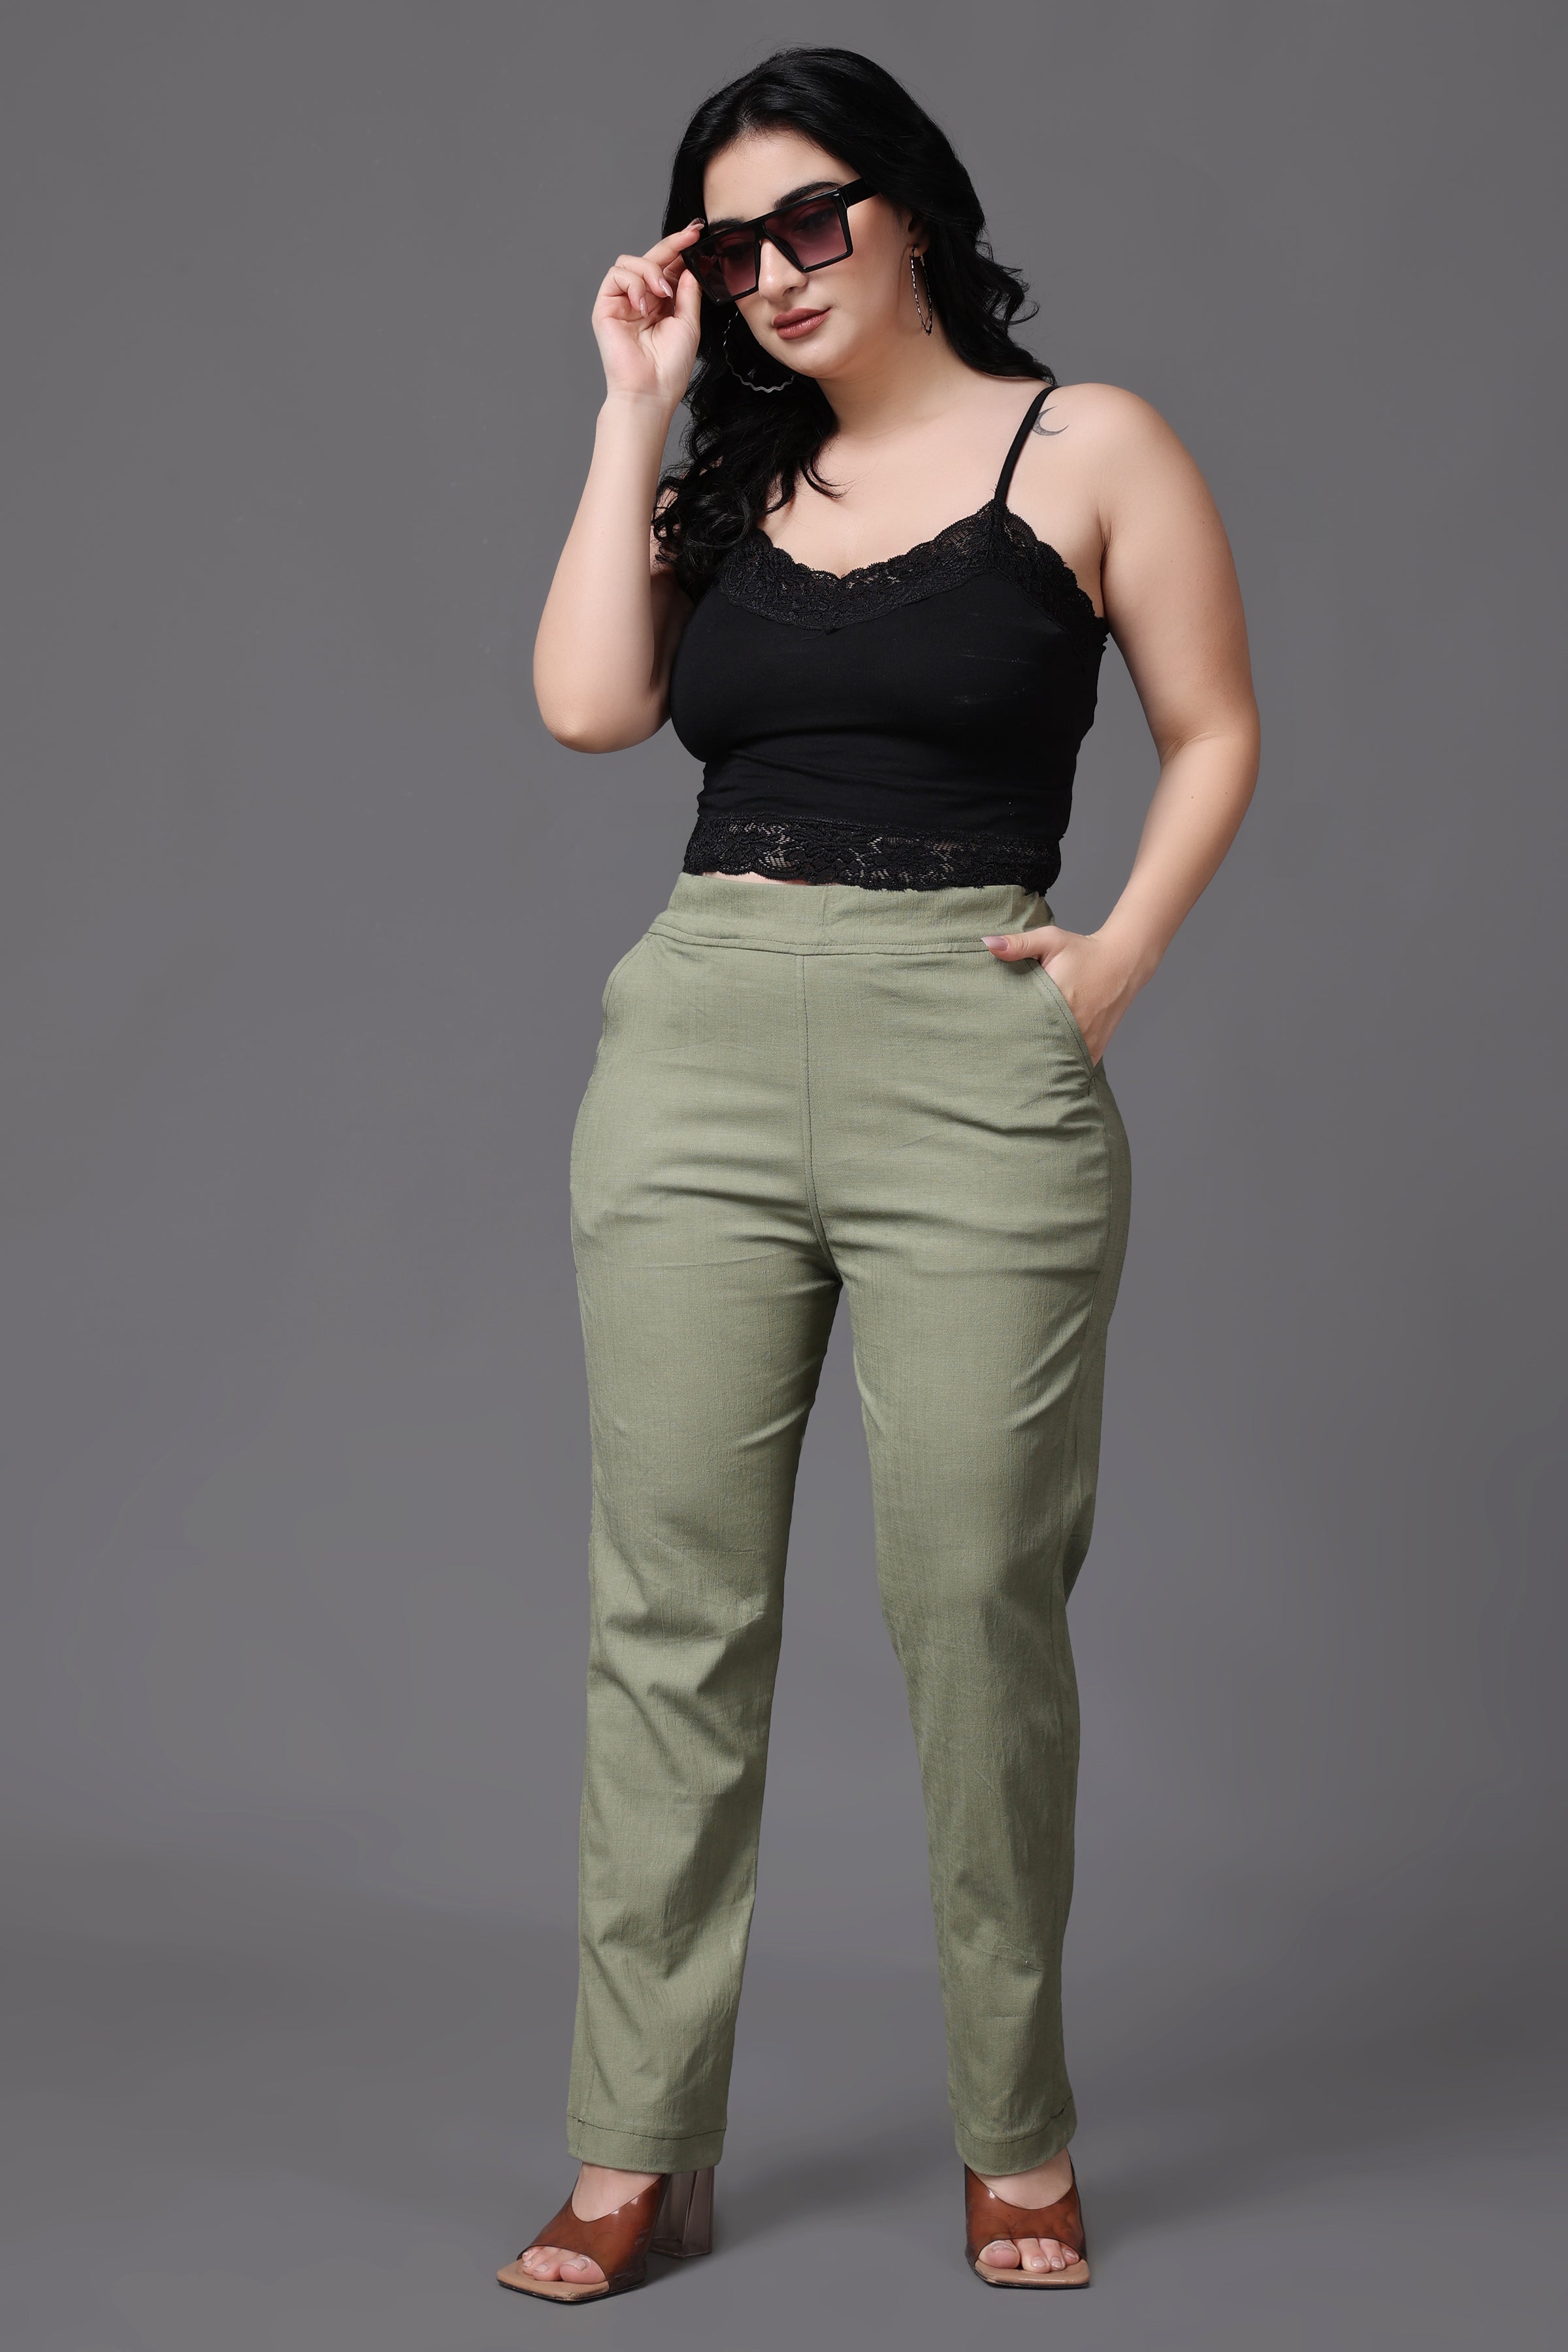 Plus Size Formal Pants Needs: Shop Stylish Options For Ladies @Amydus